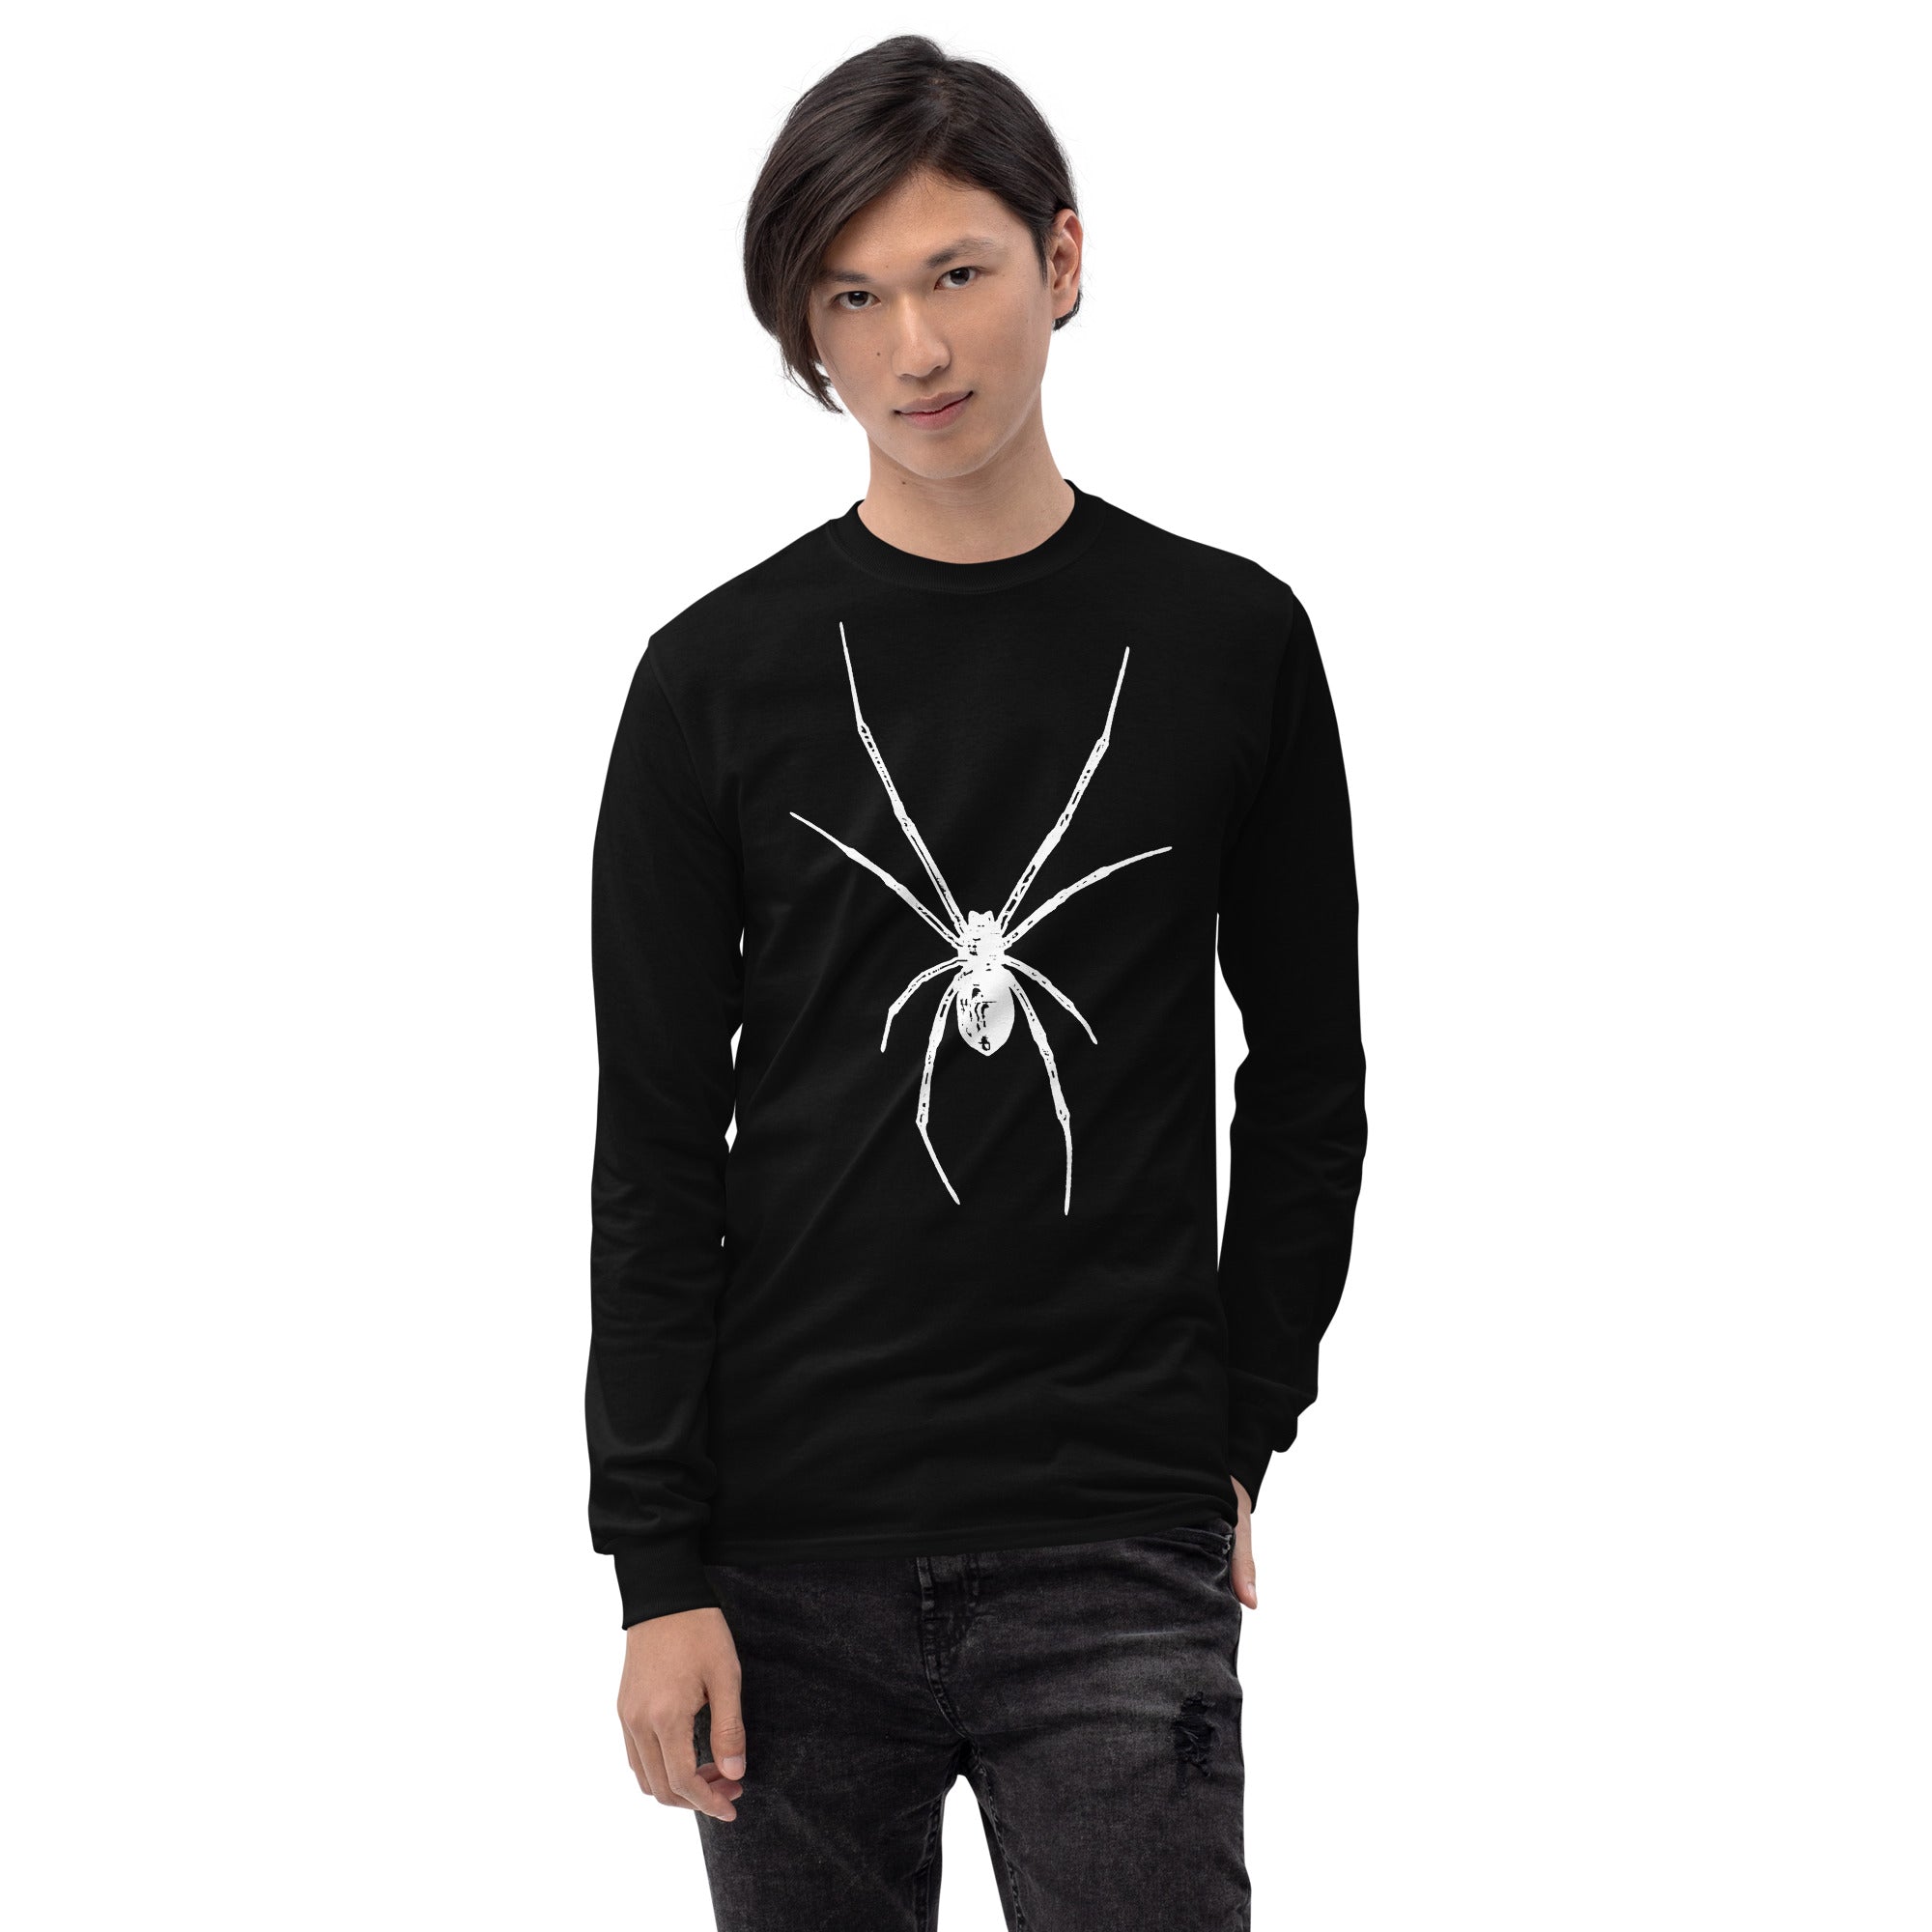 White Creepy Spider Arachnid Black Widow Long Sleeve Shirt - Edge of Life Designs